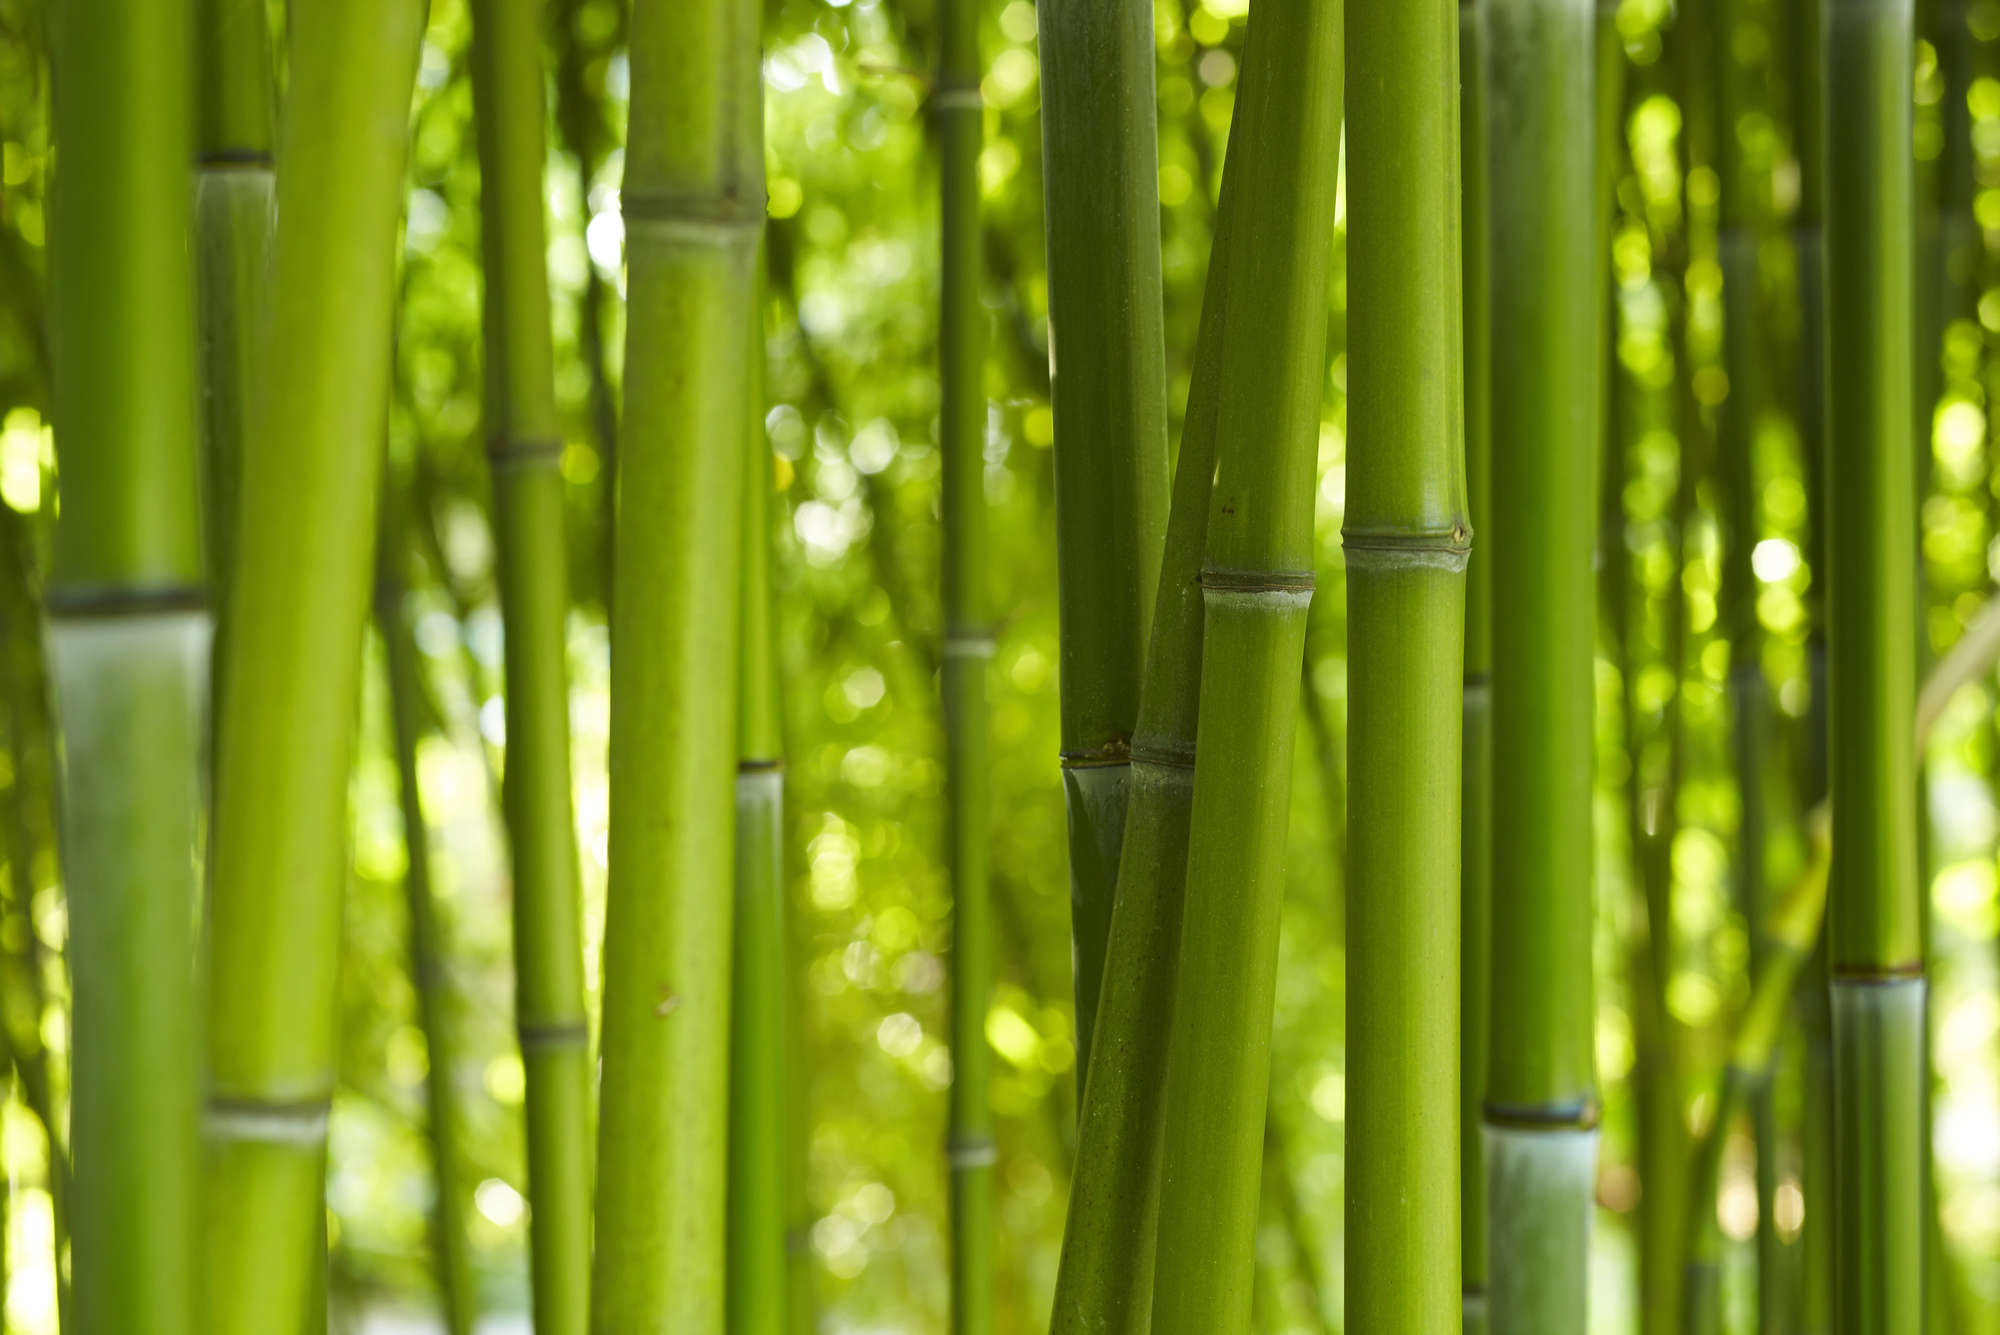             Fototapete Bambus in Grün – Premium Glattvlies
        